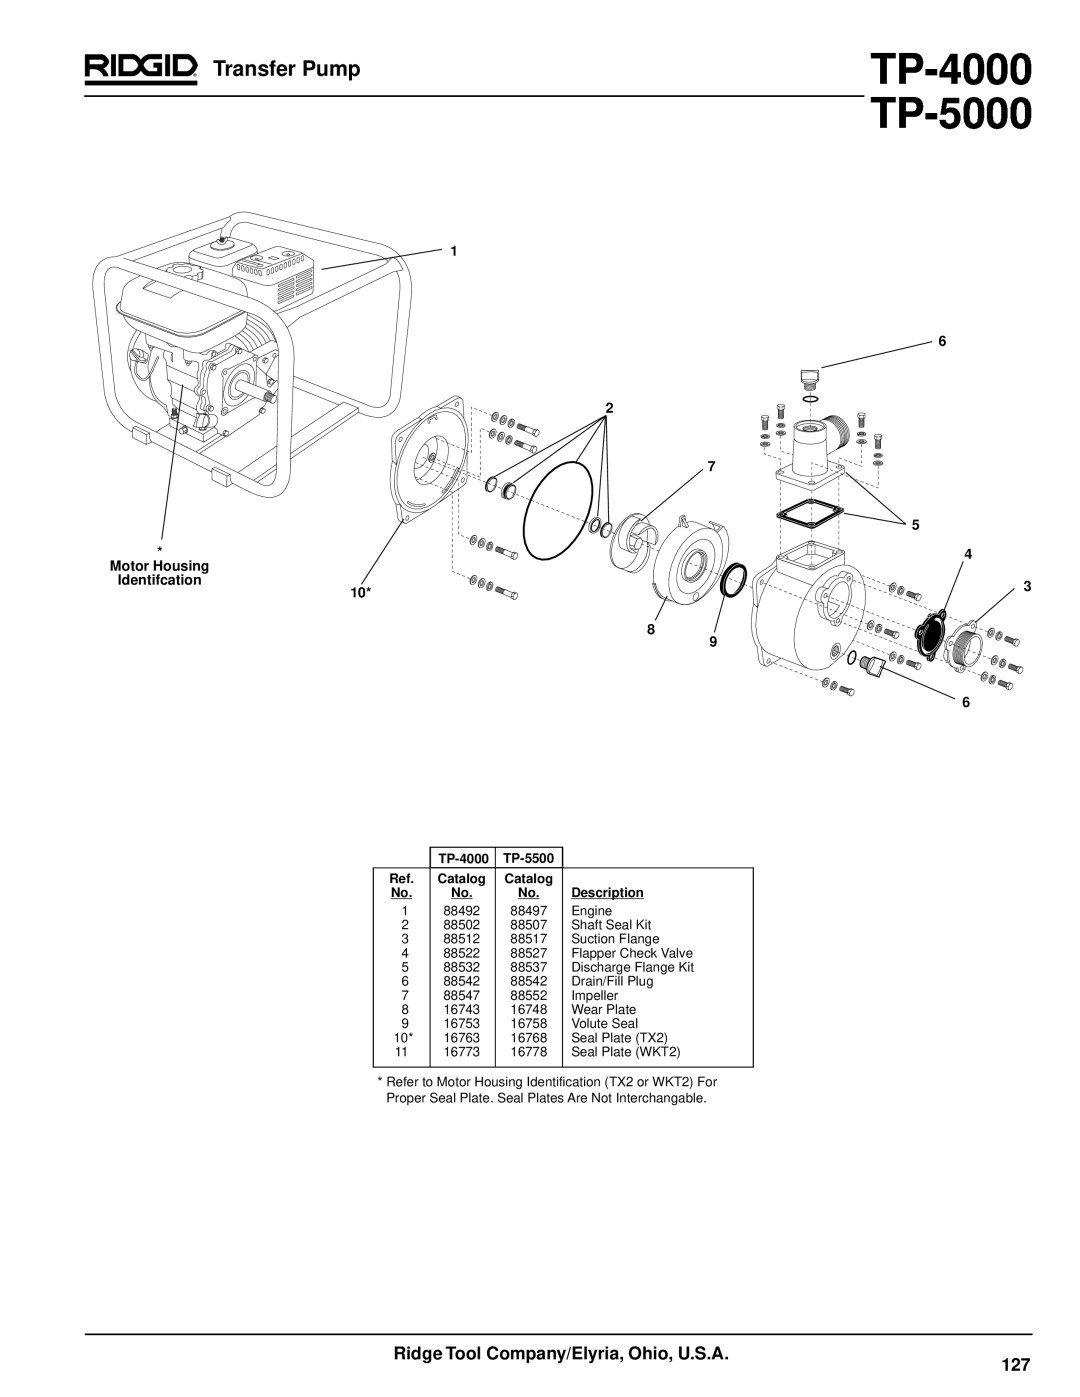 RIDGID manual TP-4000 TP-5000, Transfer Pump, Ridge Tool Company/Elyria, Ohio, U.S.A, Motor Housing Identifcation 